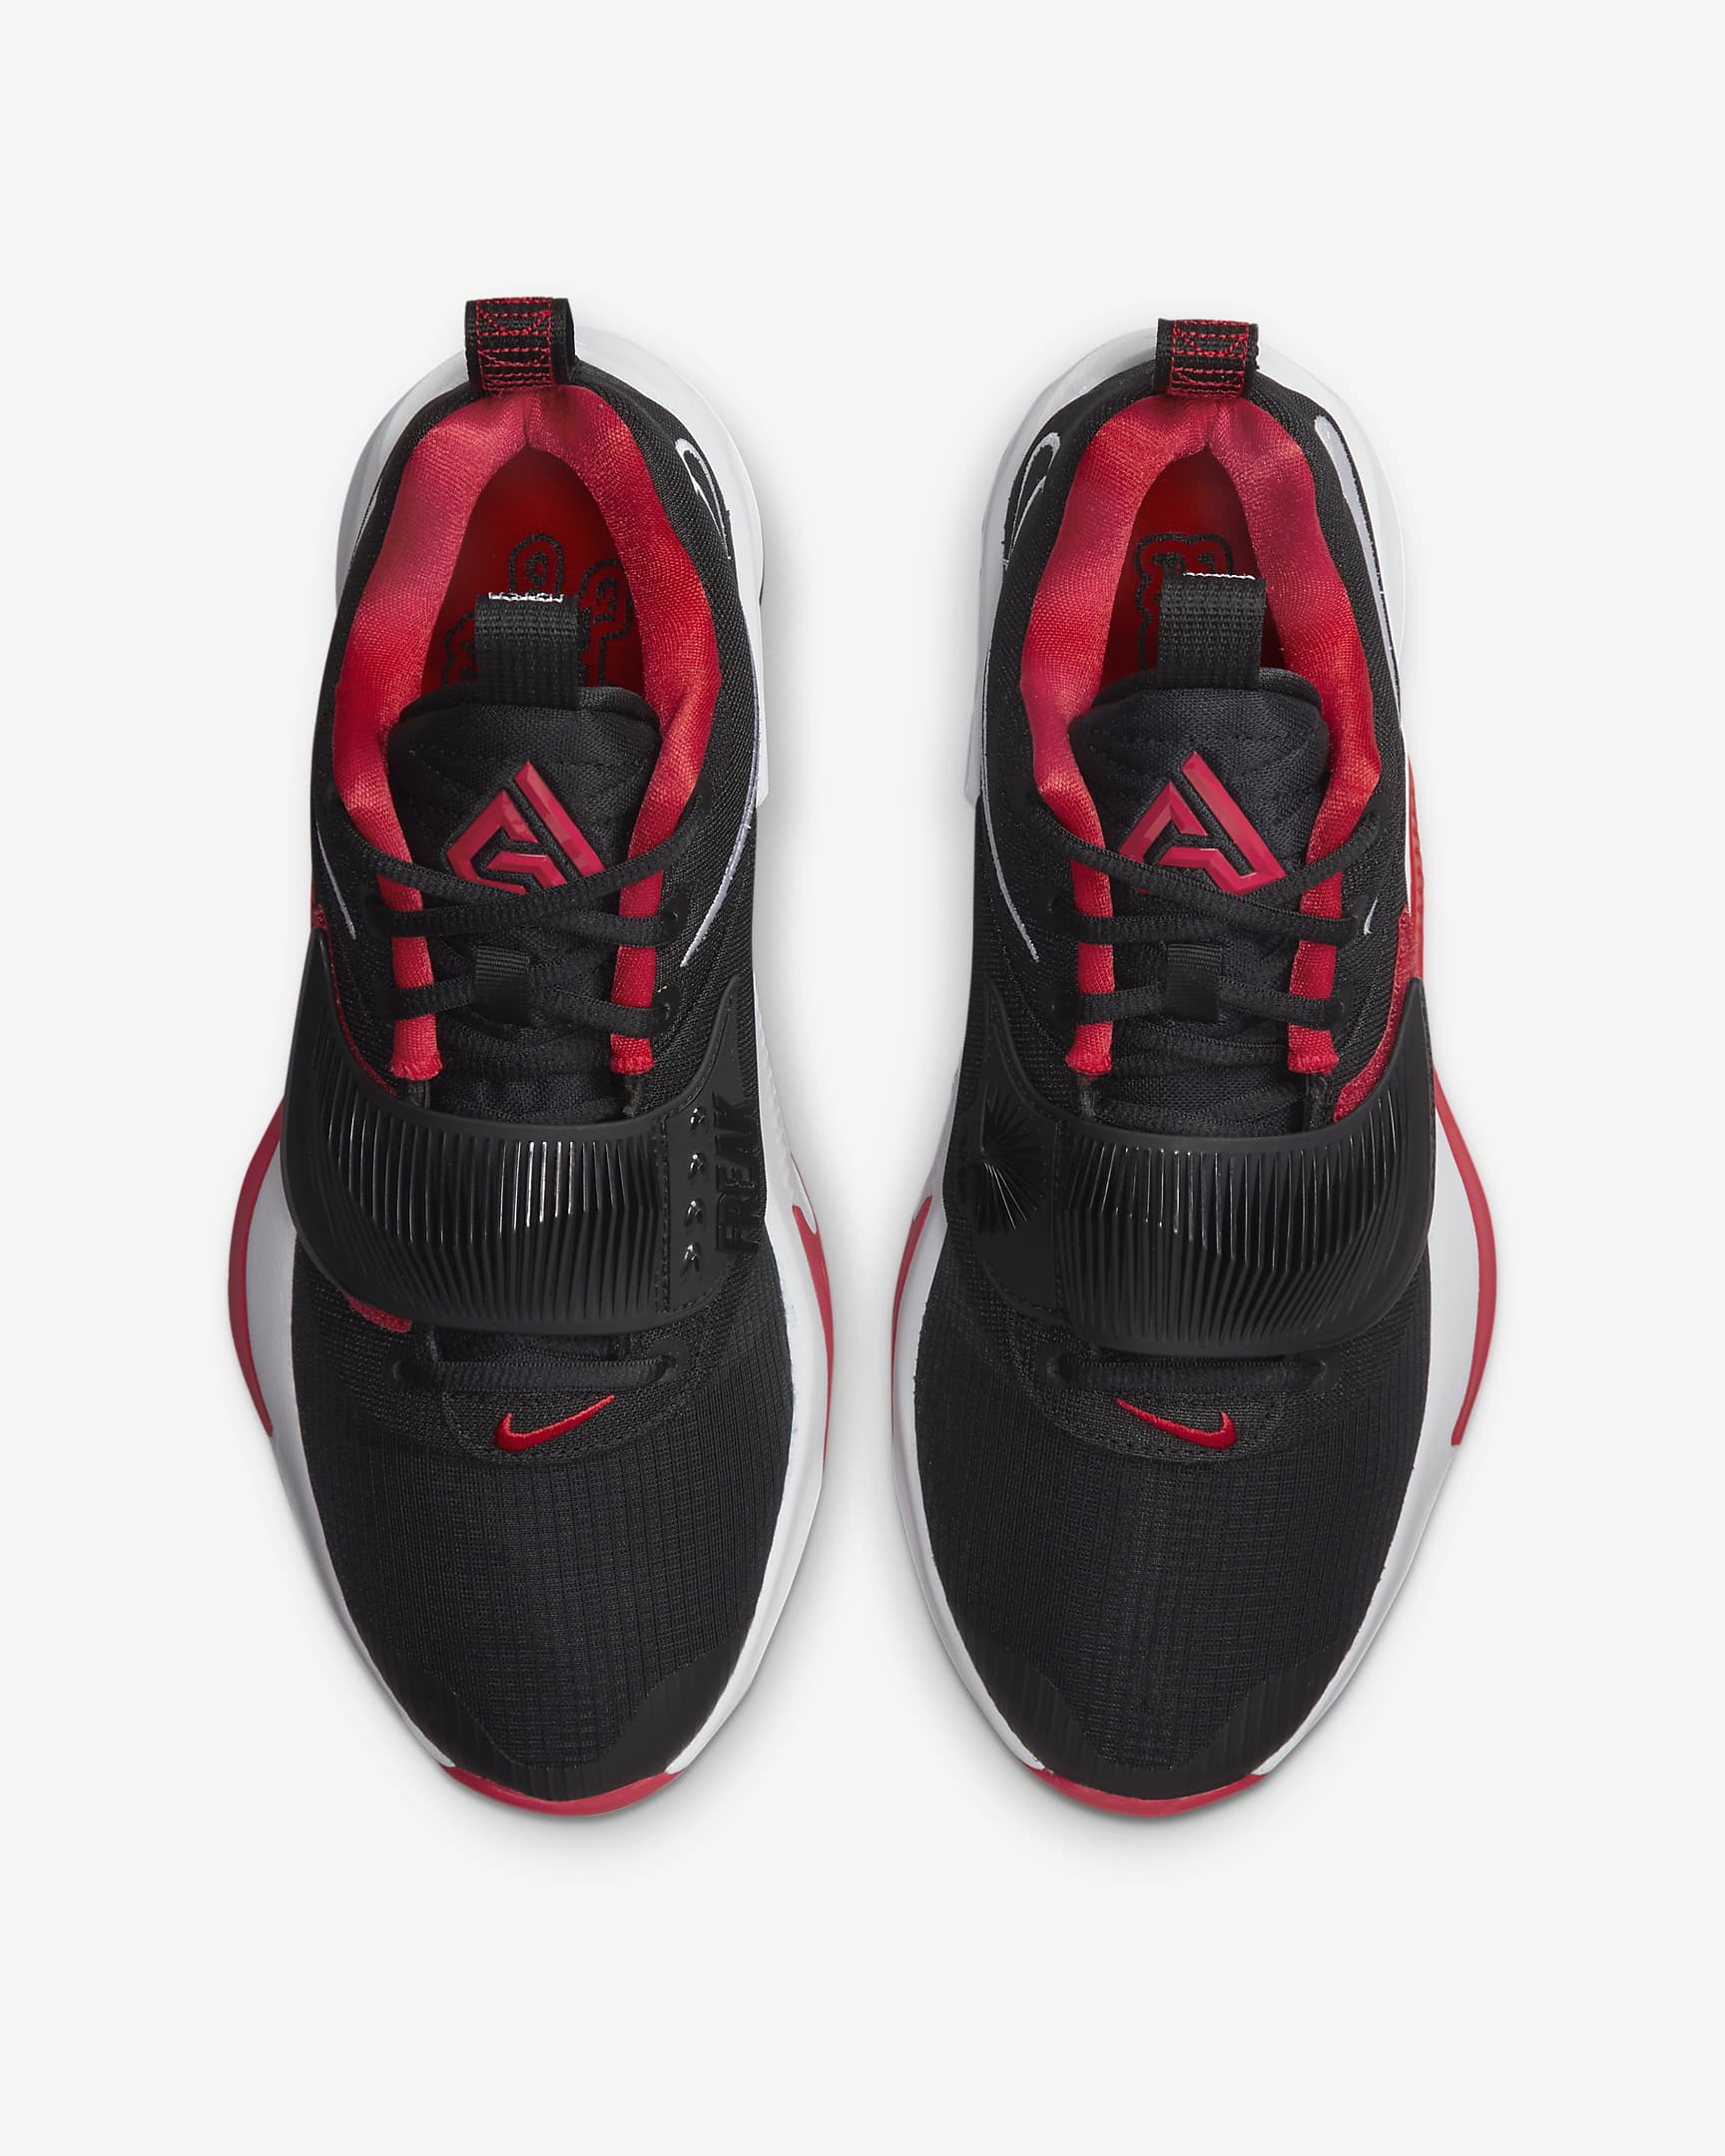 Freak 3 Basketball Shoes - Black/University Red/White